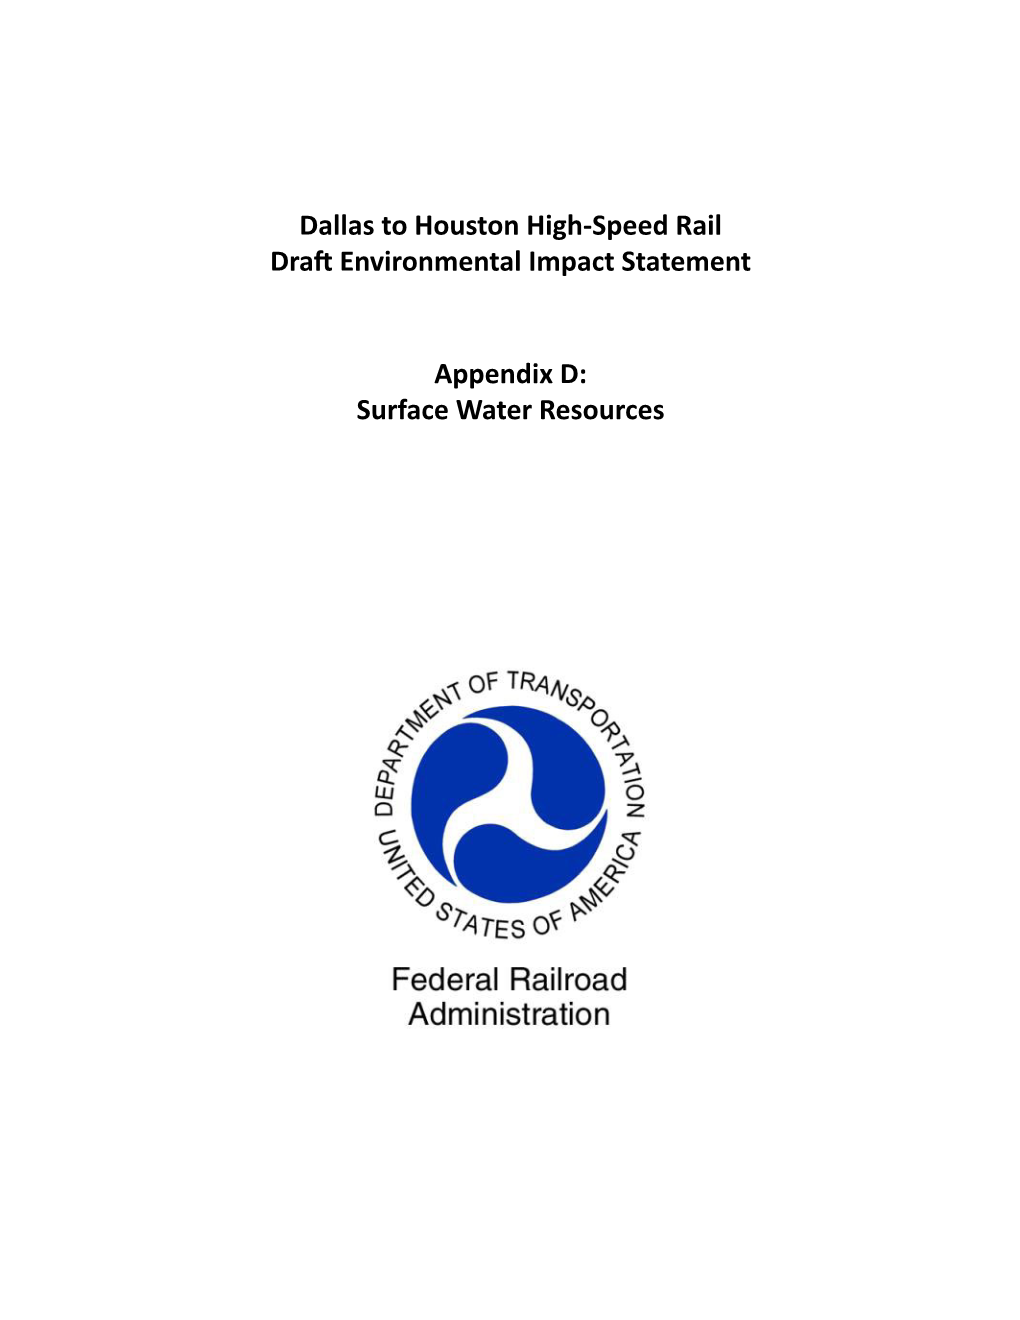 Dallas to Houston High-Speed Rail Draft Environmental Impact Statement